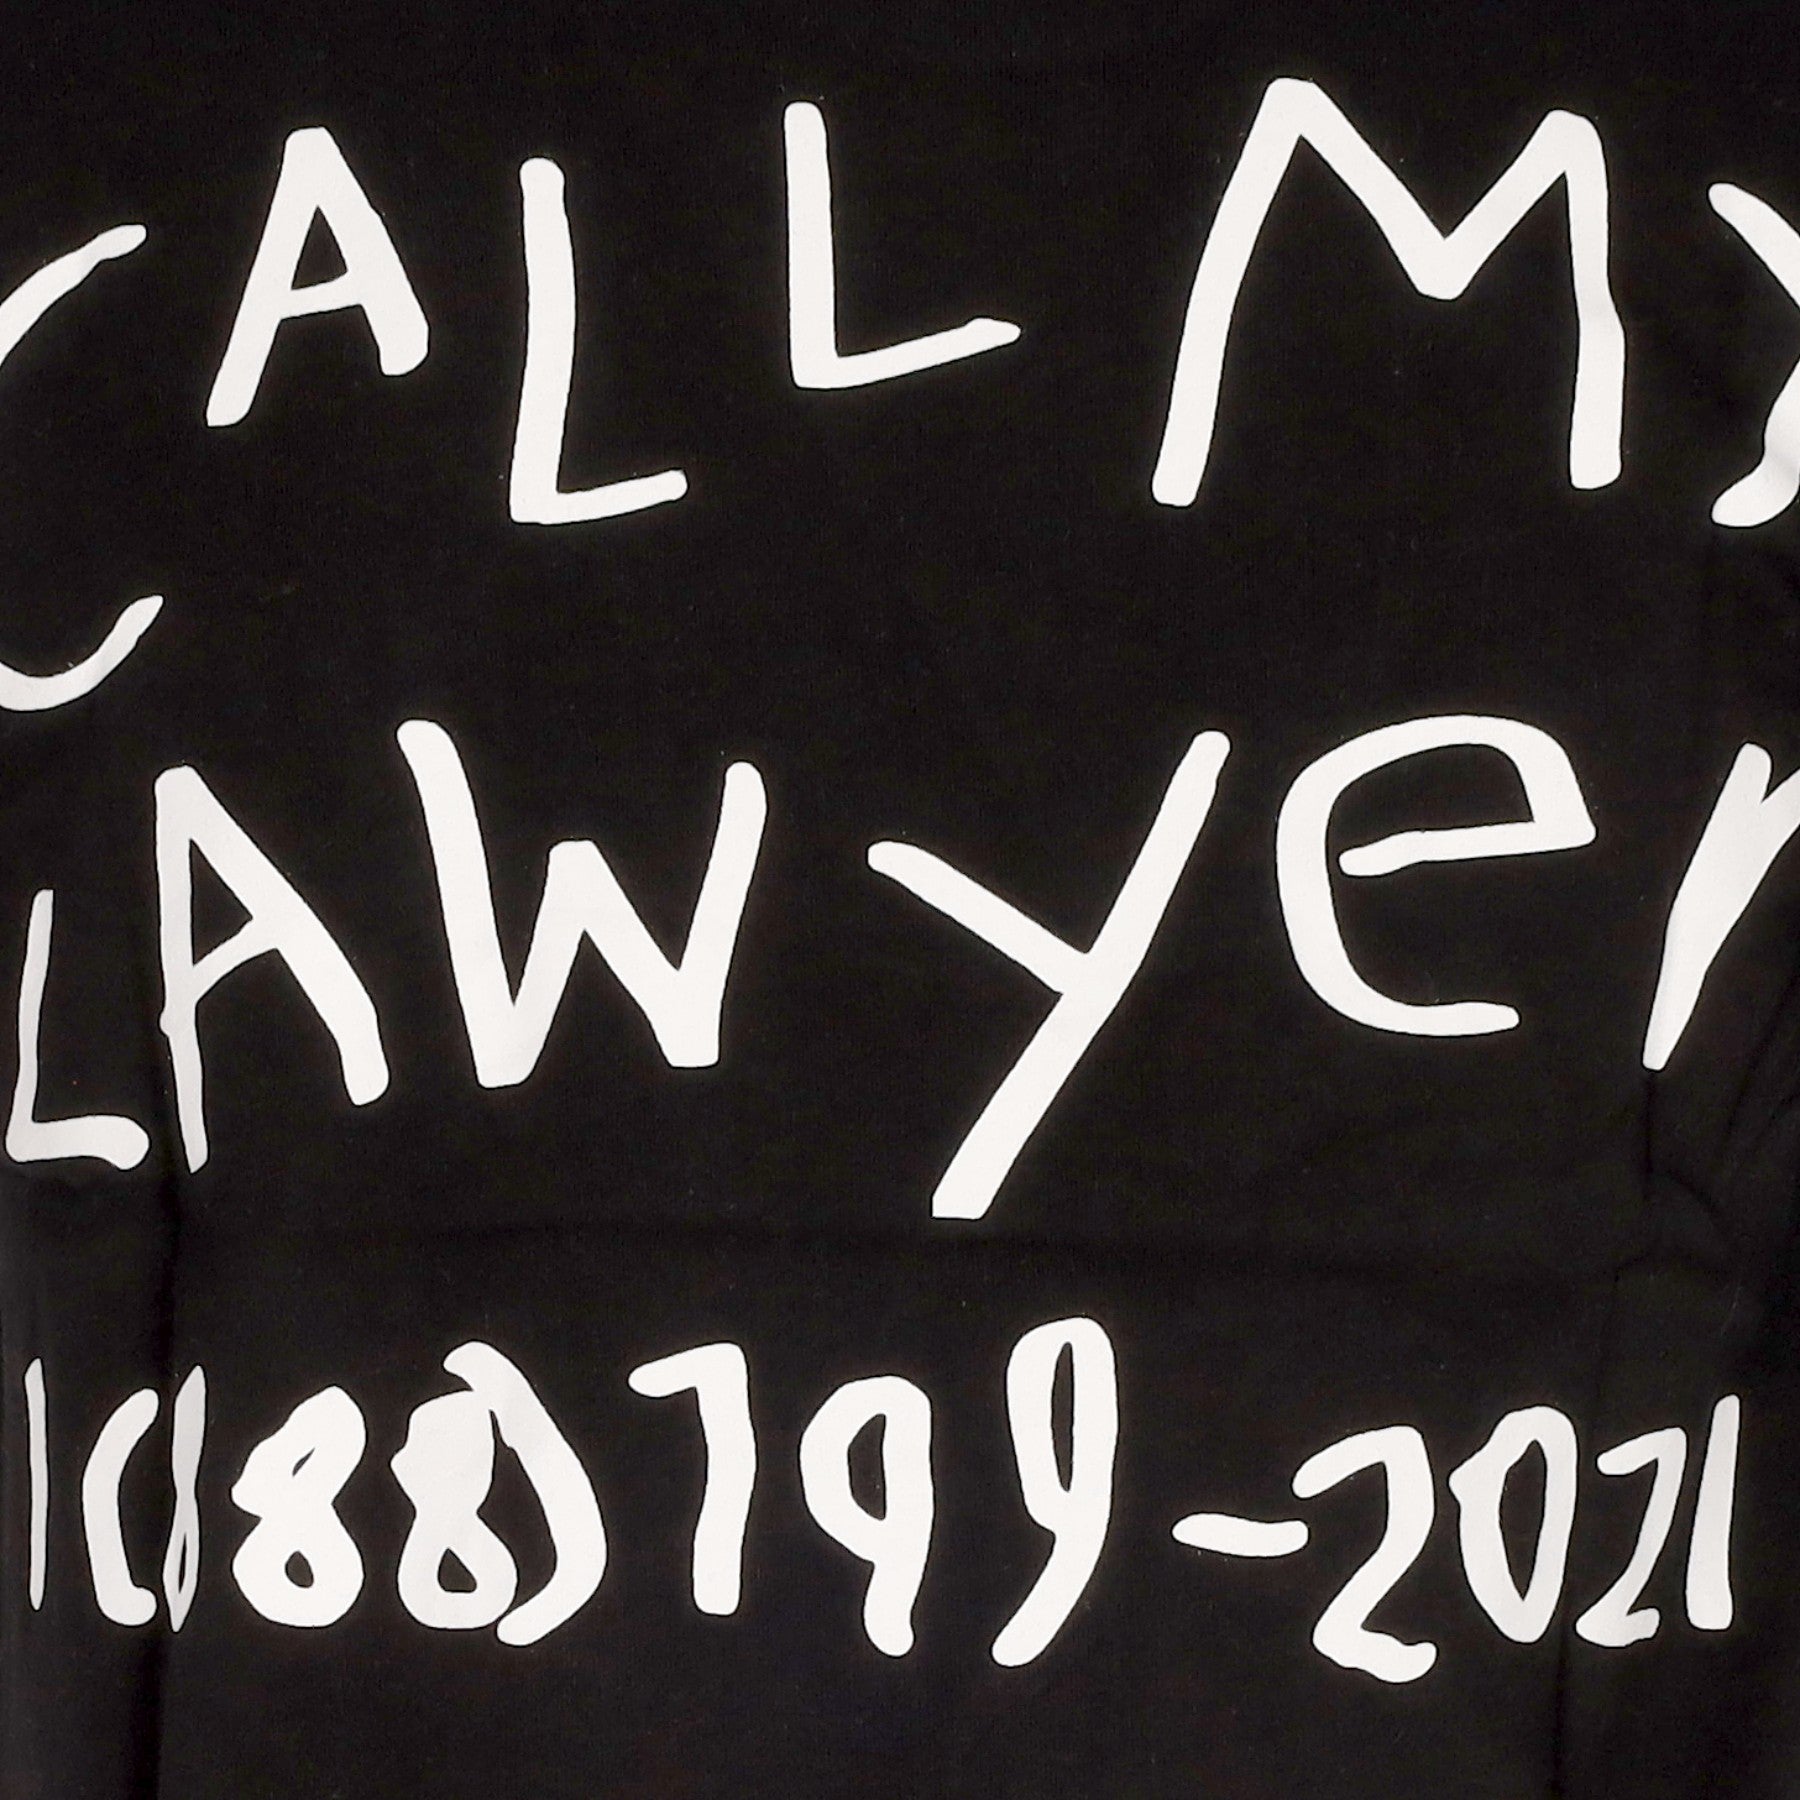 Call My Lawyer Hand Drawn Tee Black Men's T-Shirt